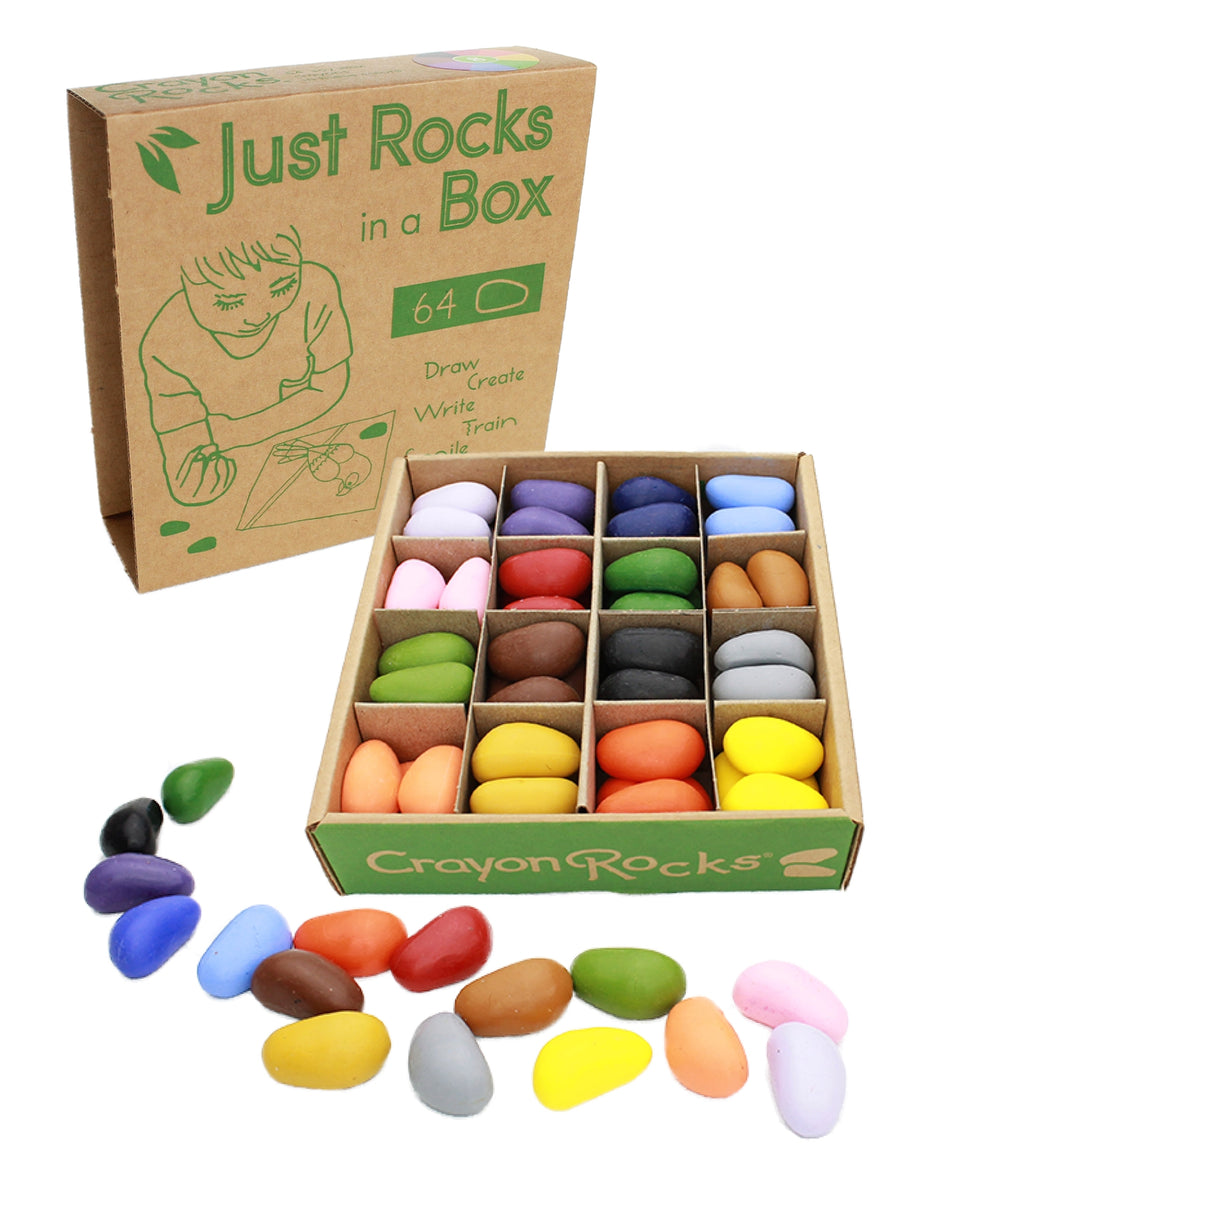 Just Rocks in a Box - Crayon Rocks